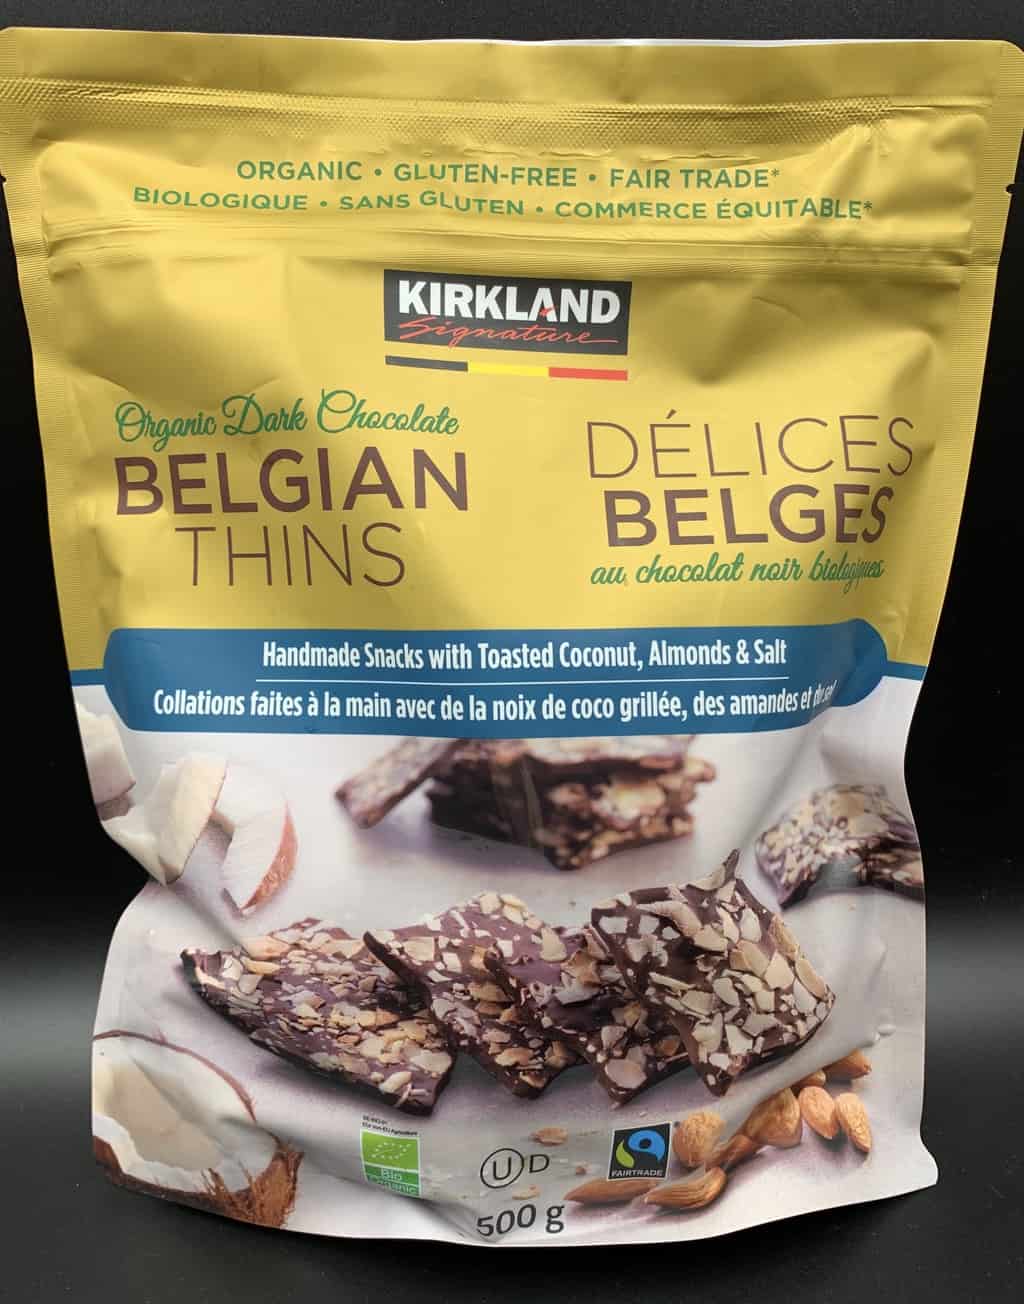 Costco Kirkland Signature Organic Dark Chocolate Belgian Thins Review ...